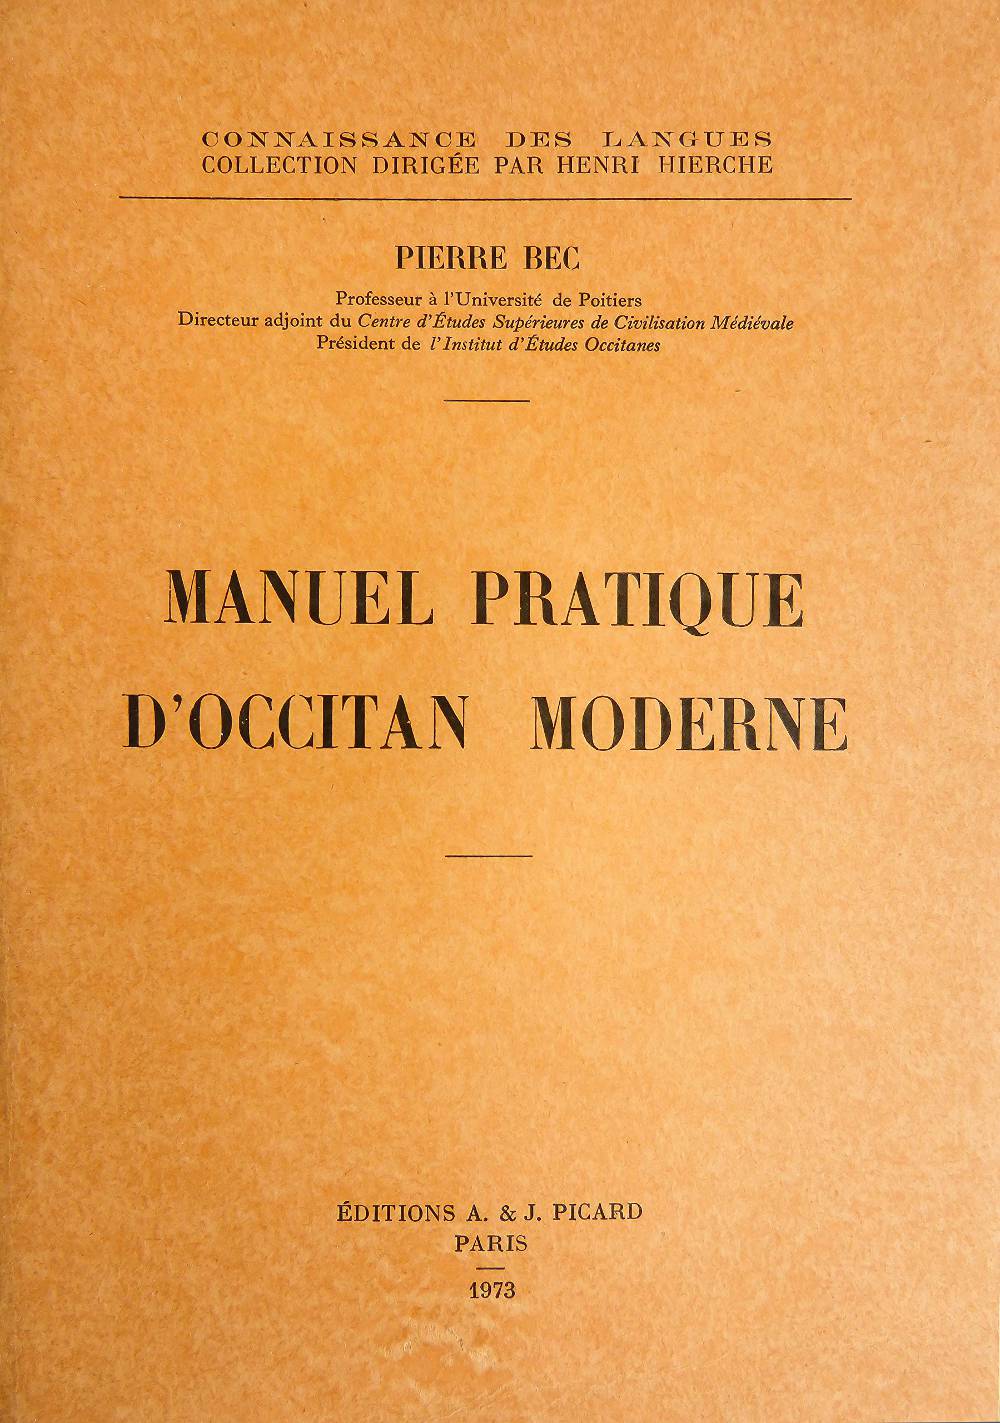 Manuel pratique d'occitan moderne